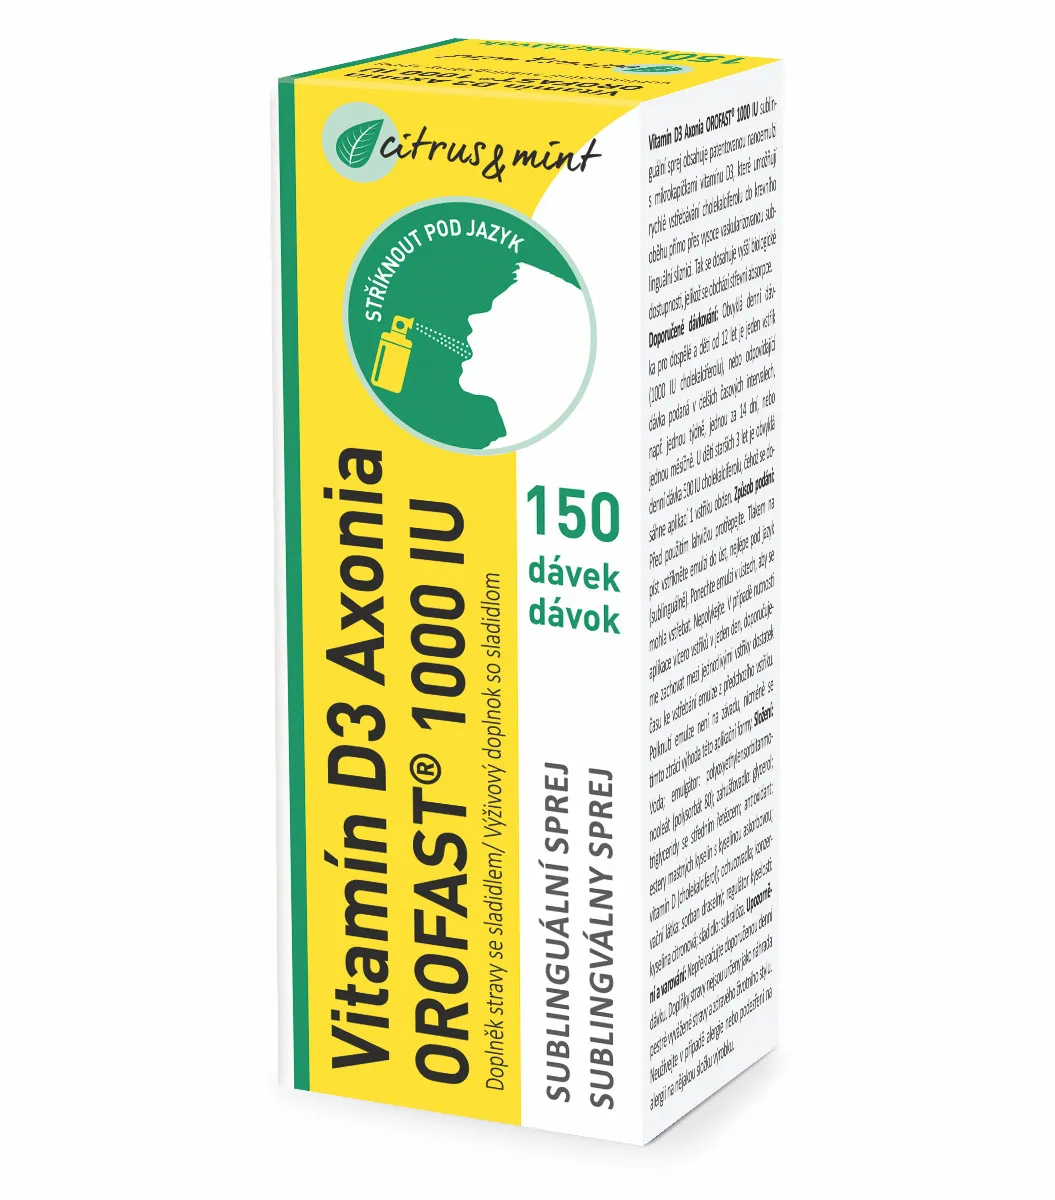 Vitamín D3 Axonia OROFAST 1000 IU sublinguální sprej 30 ml